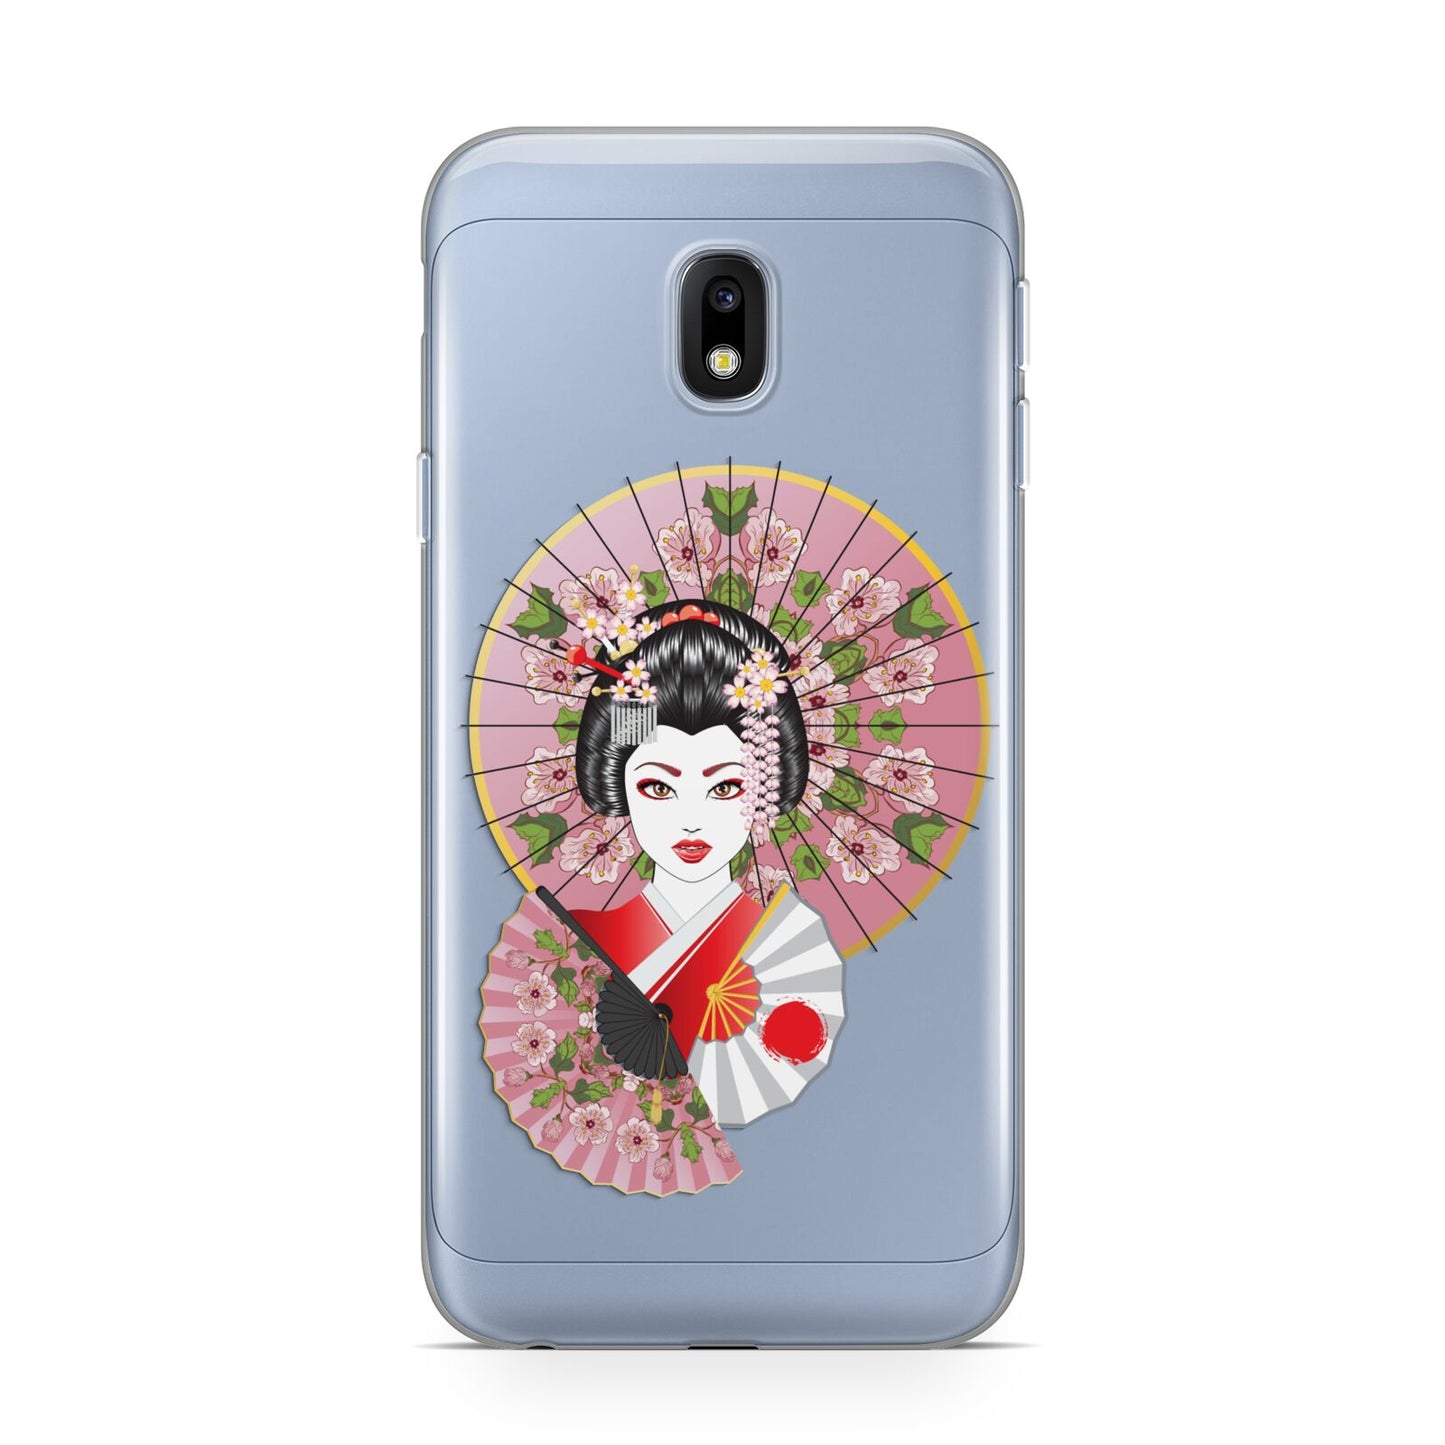 Geisha Girl Samsung Galaxy J3 2017 Case